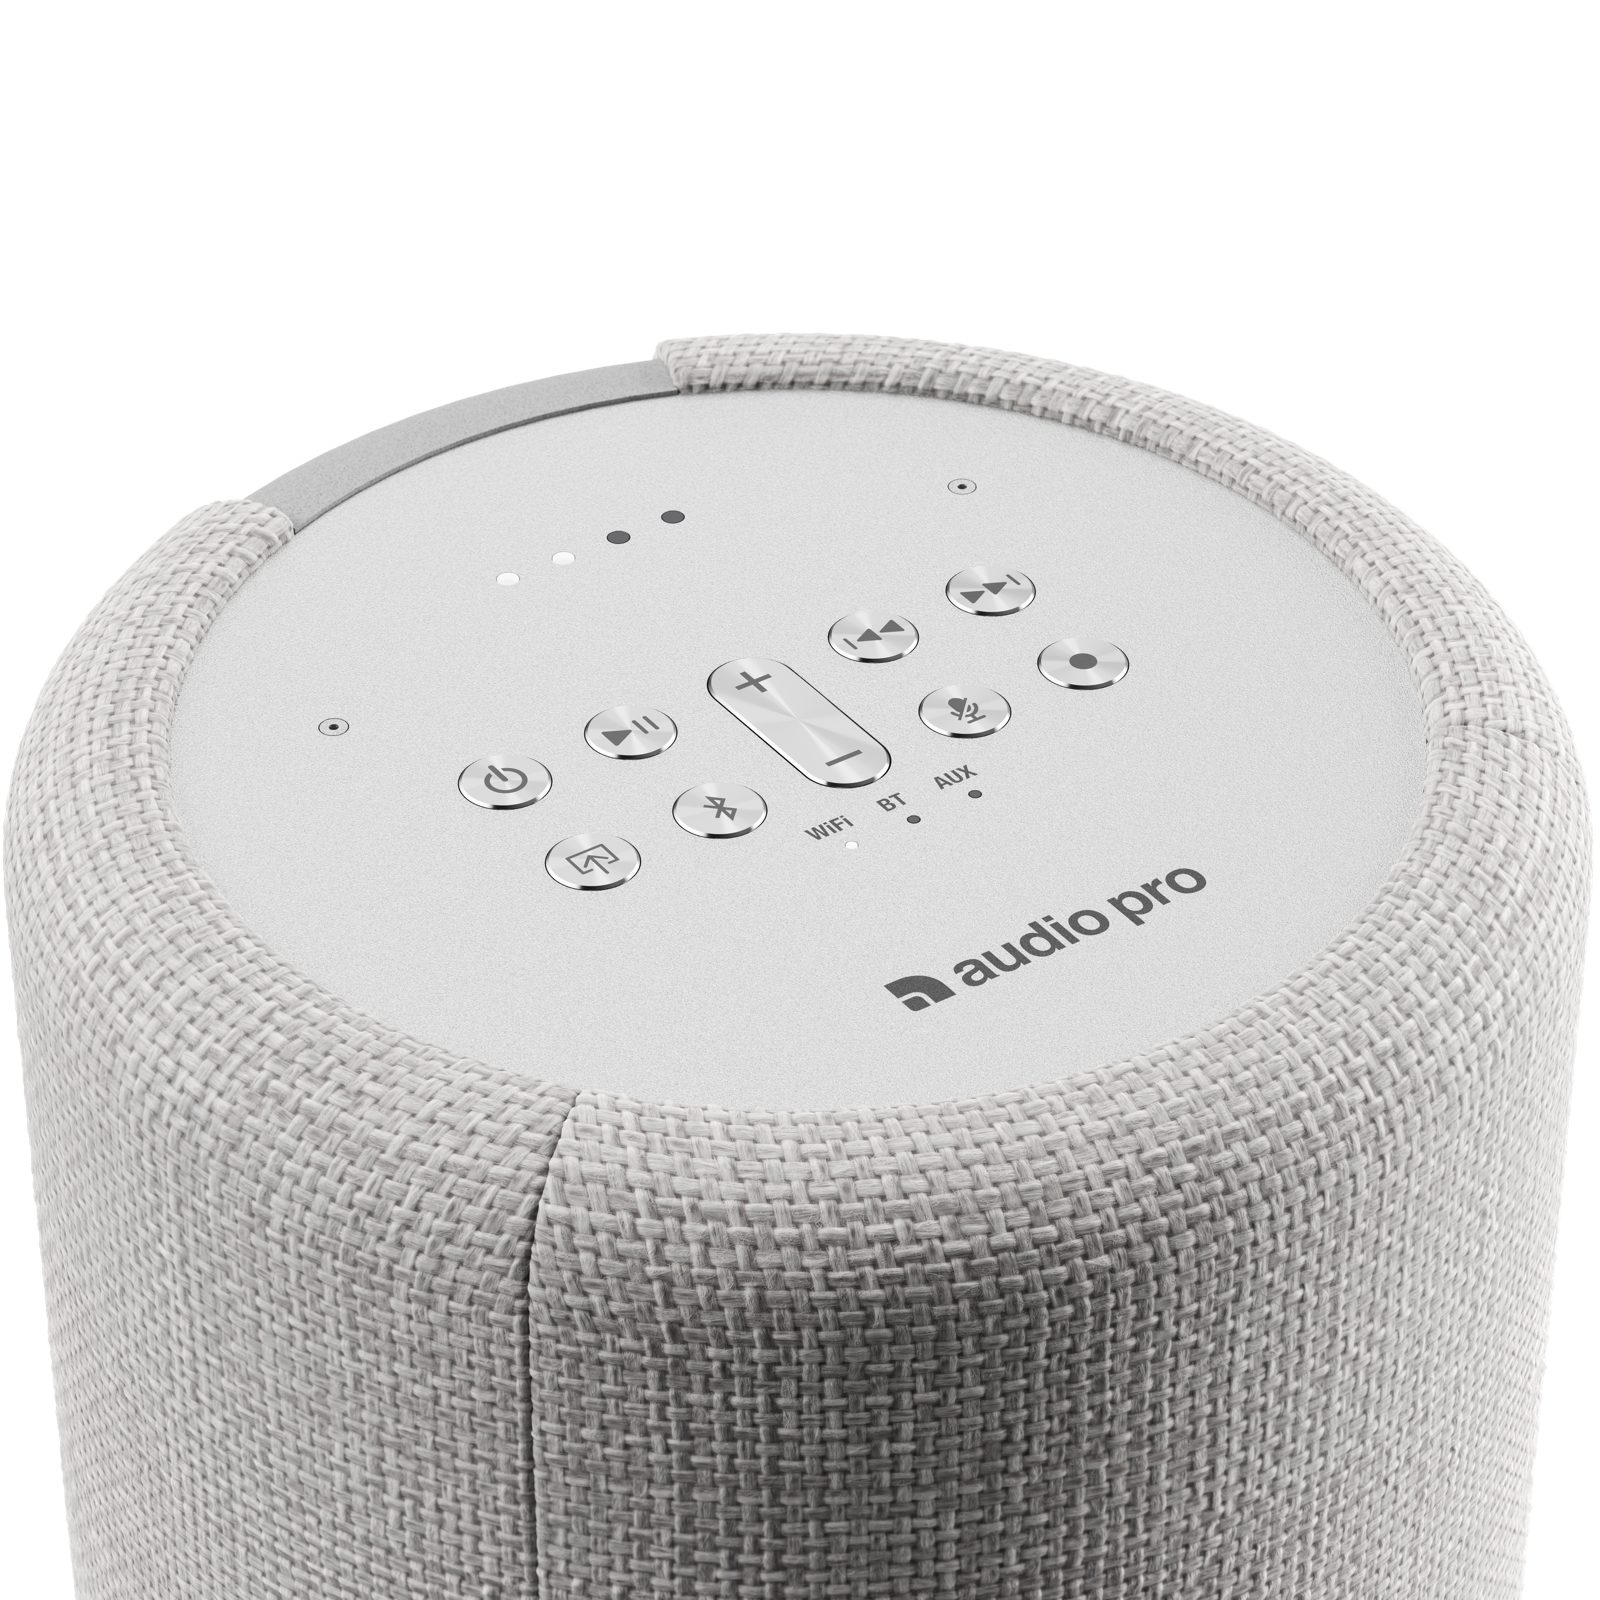 Speaker Google AirPlay Pro 2 Lautsprecher Smarter Hellgrau Home Audio & Assistant